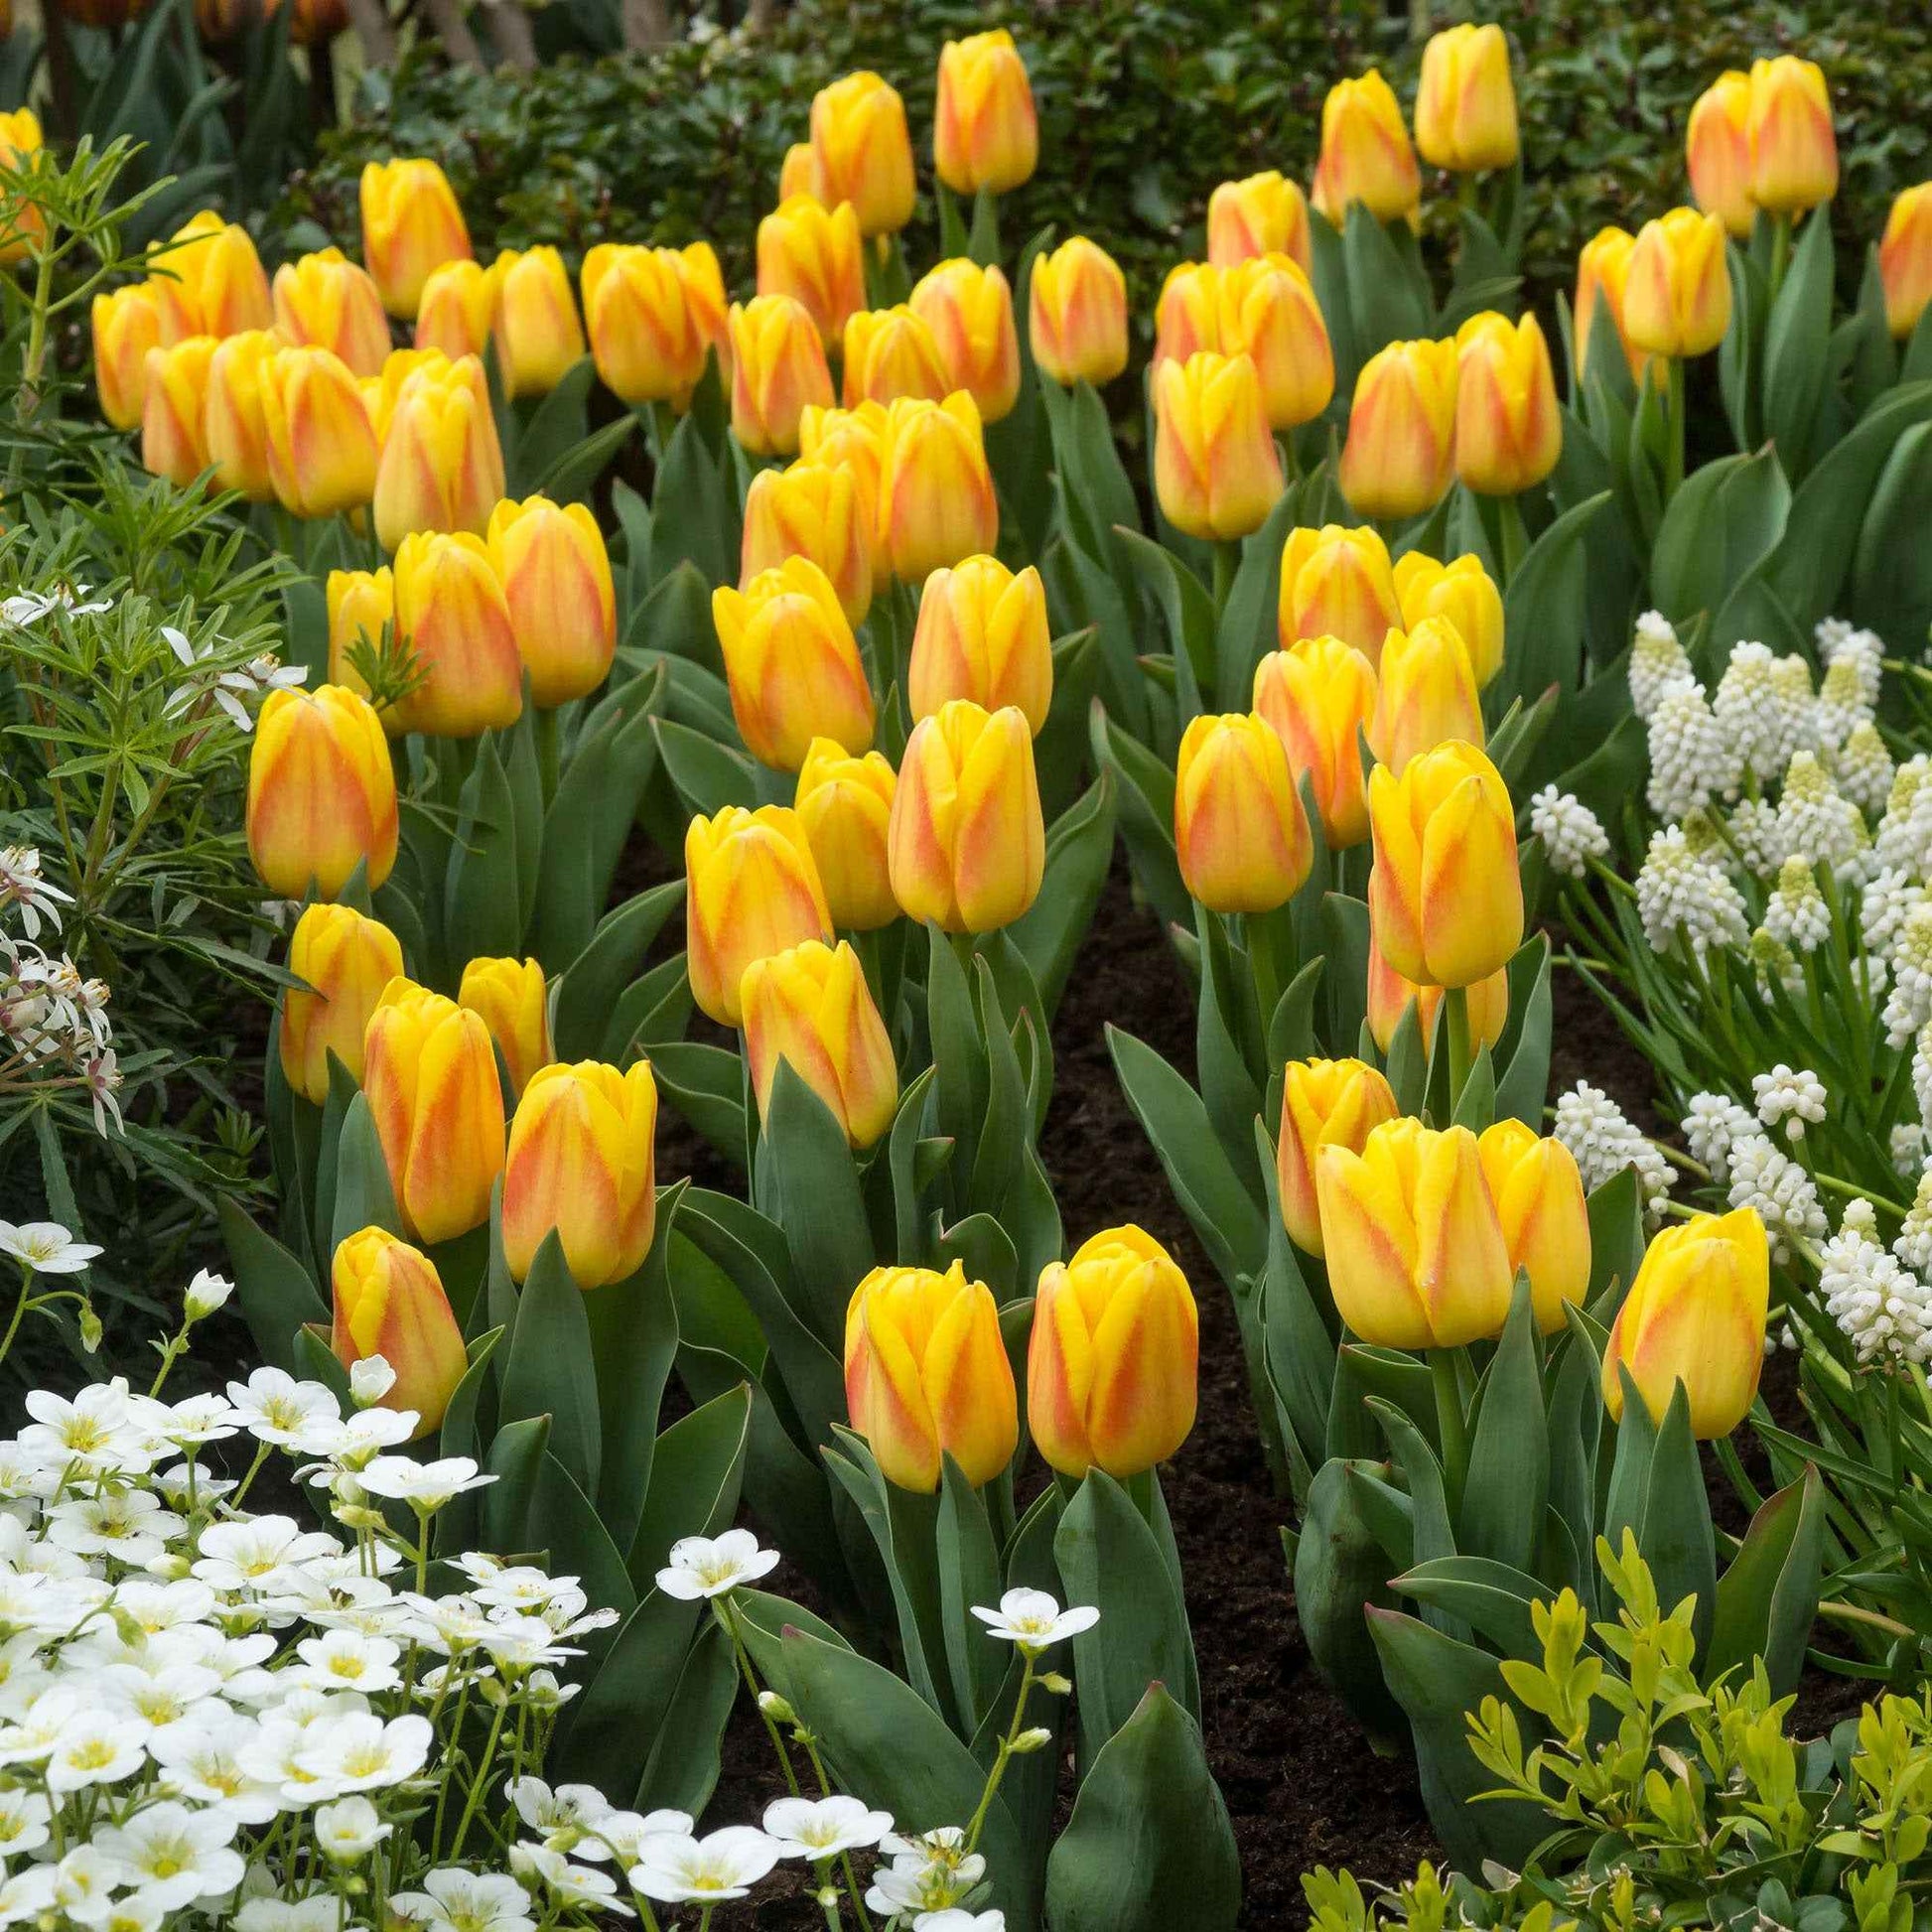 12x Tulpen Tulipa Ice Lolly Geel-Rood - Alle populaire bloembollen